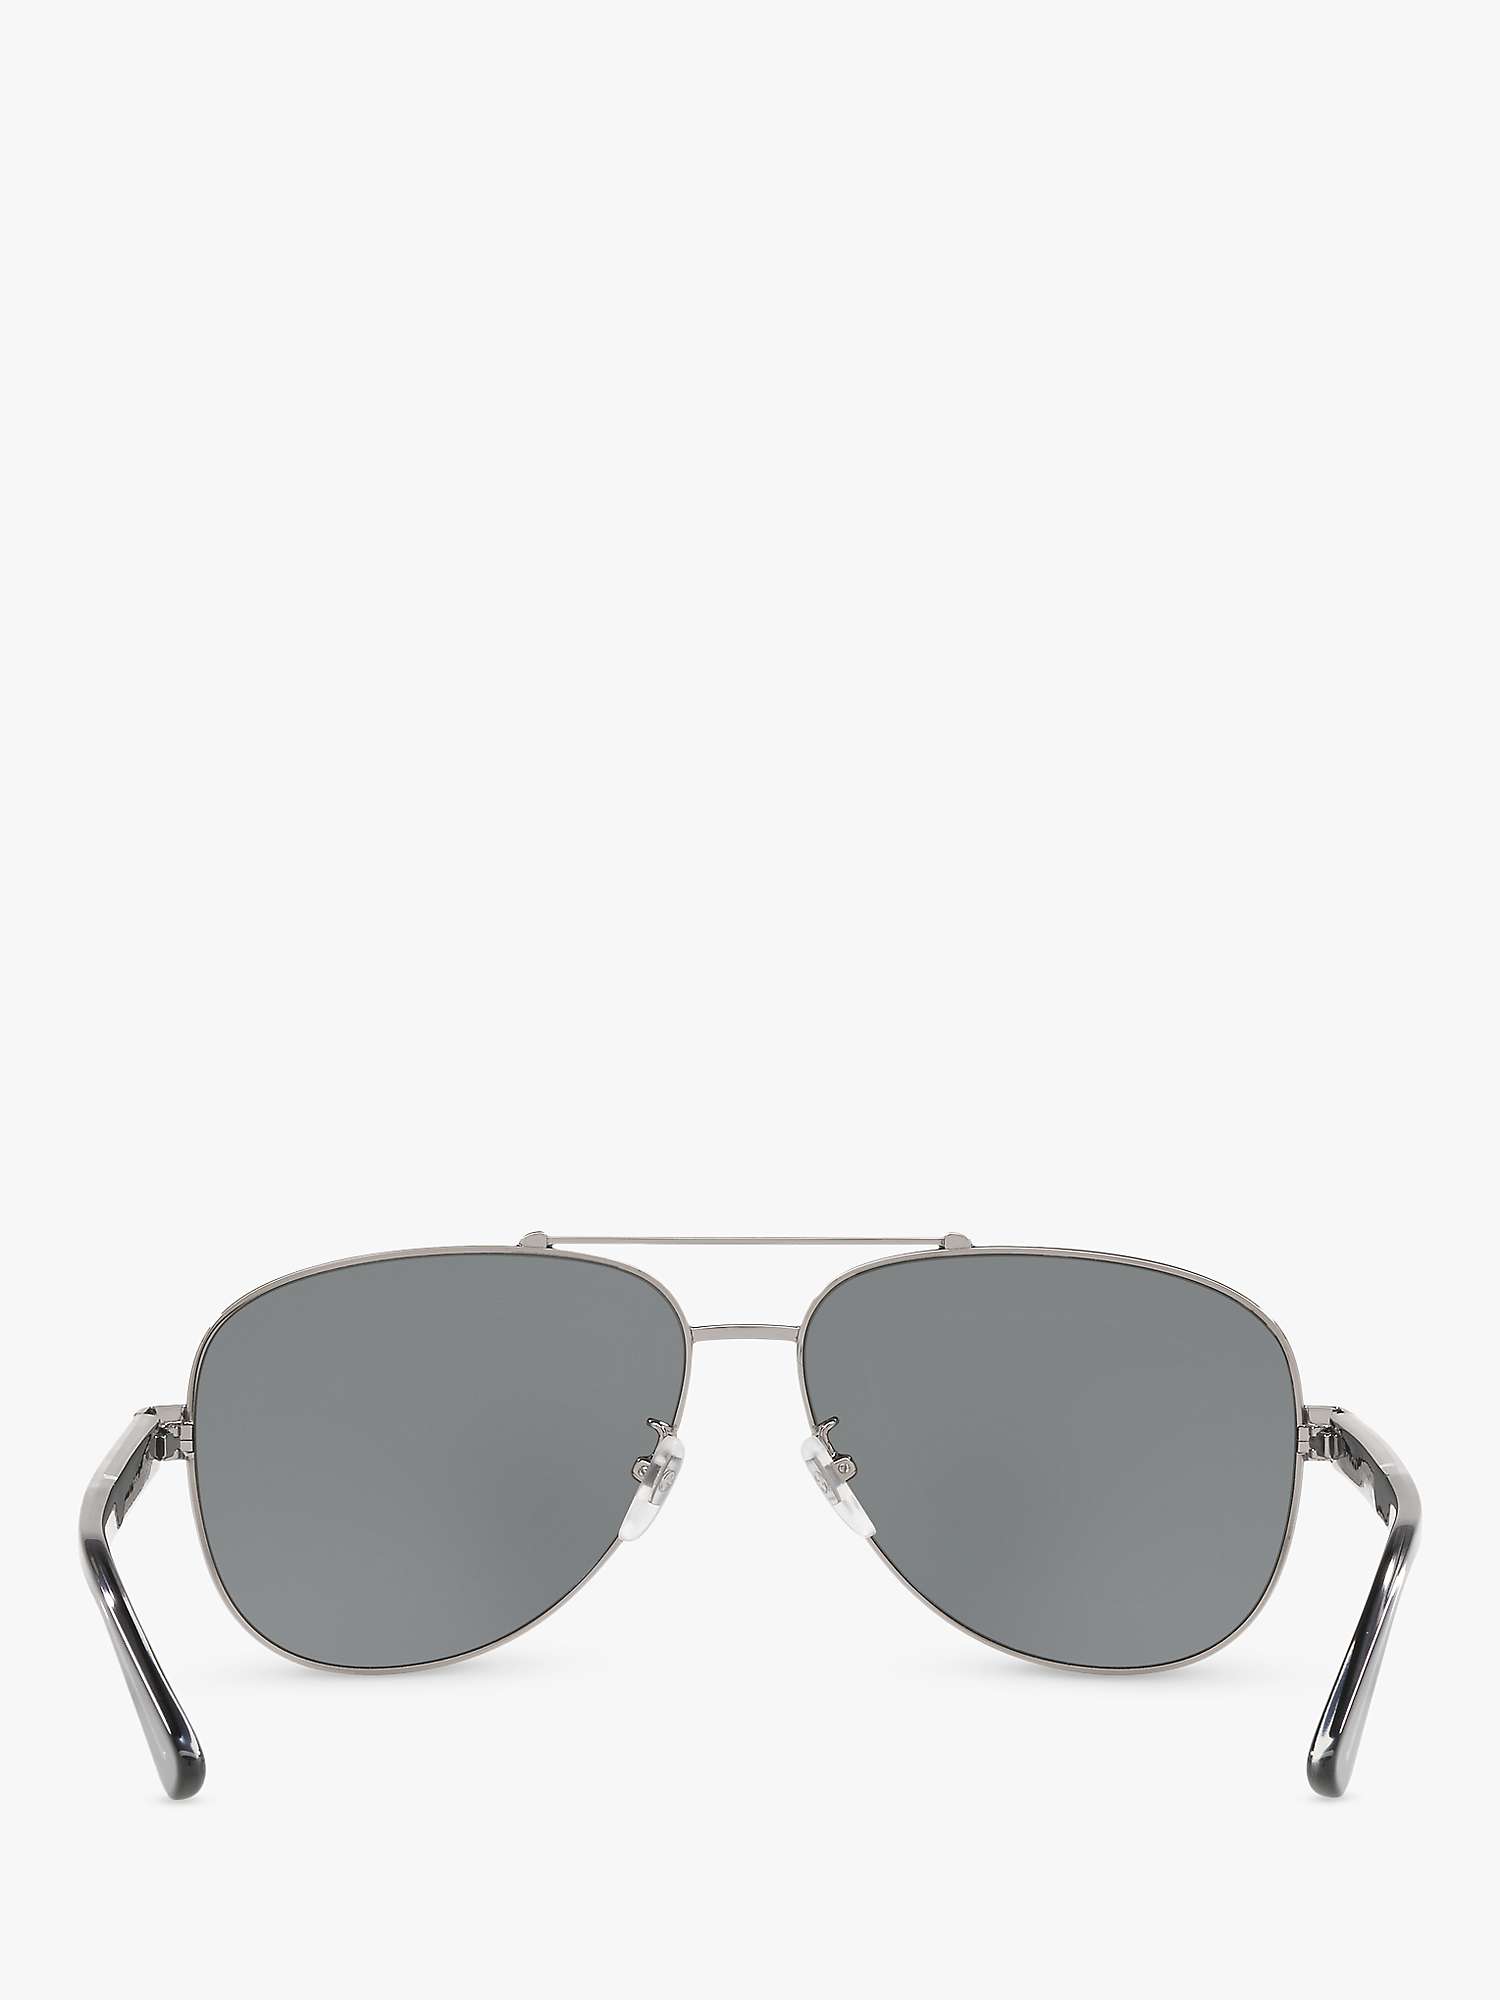 Buy Gucci GG0528S Men's Aviator Polarised Aviator Sunglasses, Silver/Grey Online at johnlewis.com